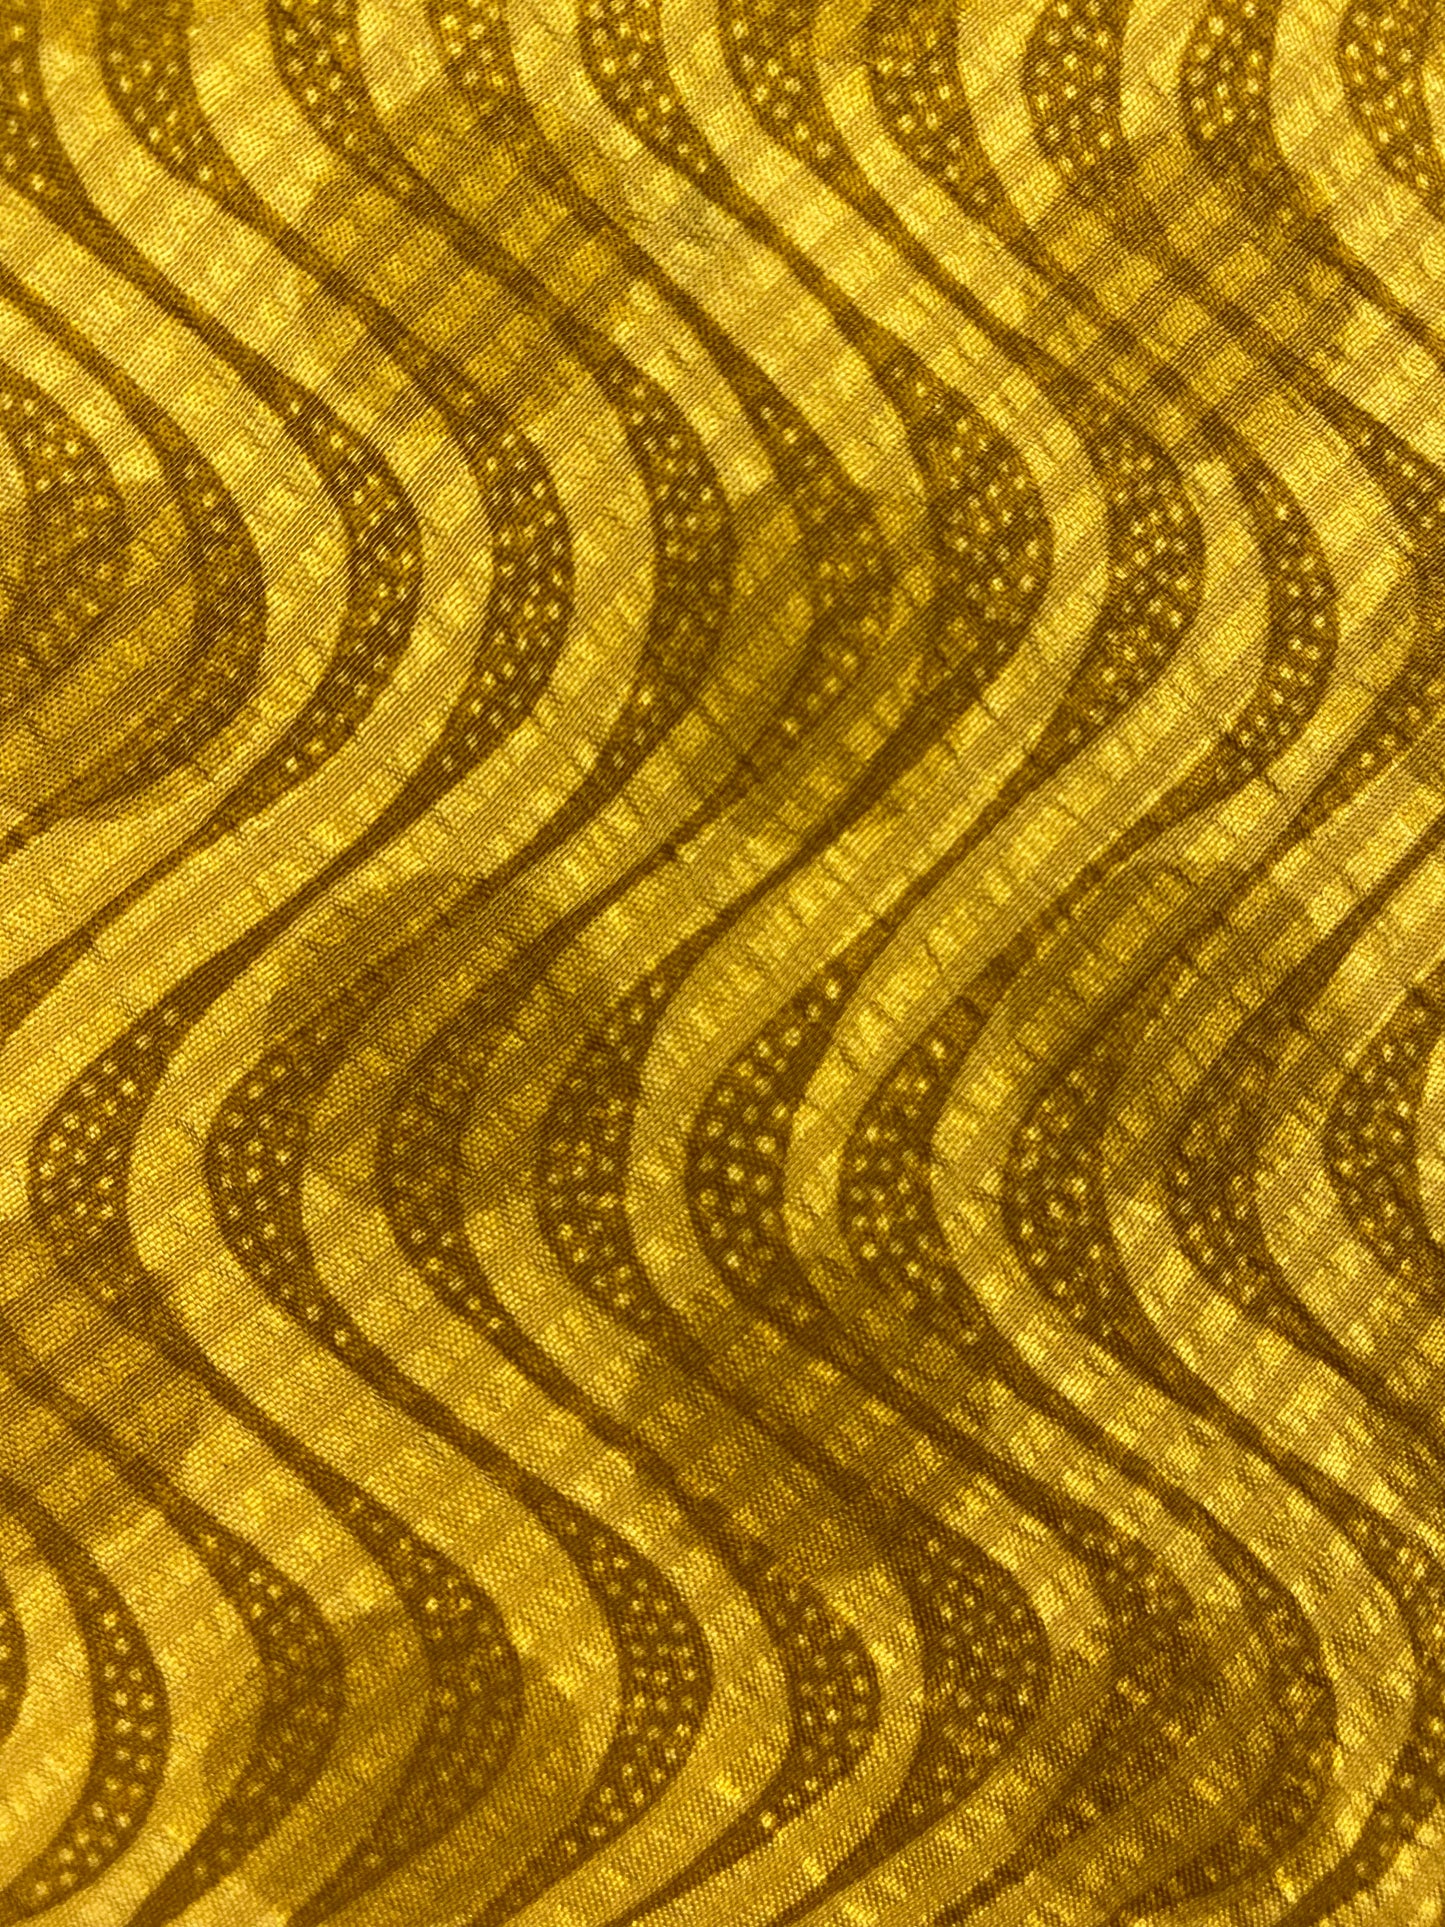 Close-up pattern detail of: 90s Deadstock Silk Necktie, Men's Vintage Gold Geometric Waves/ Circles Pattern Tie, NOS